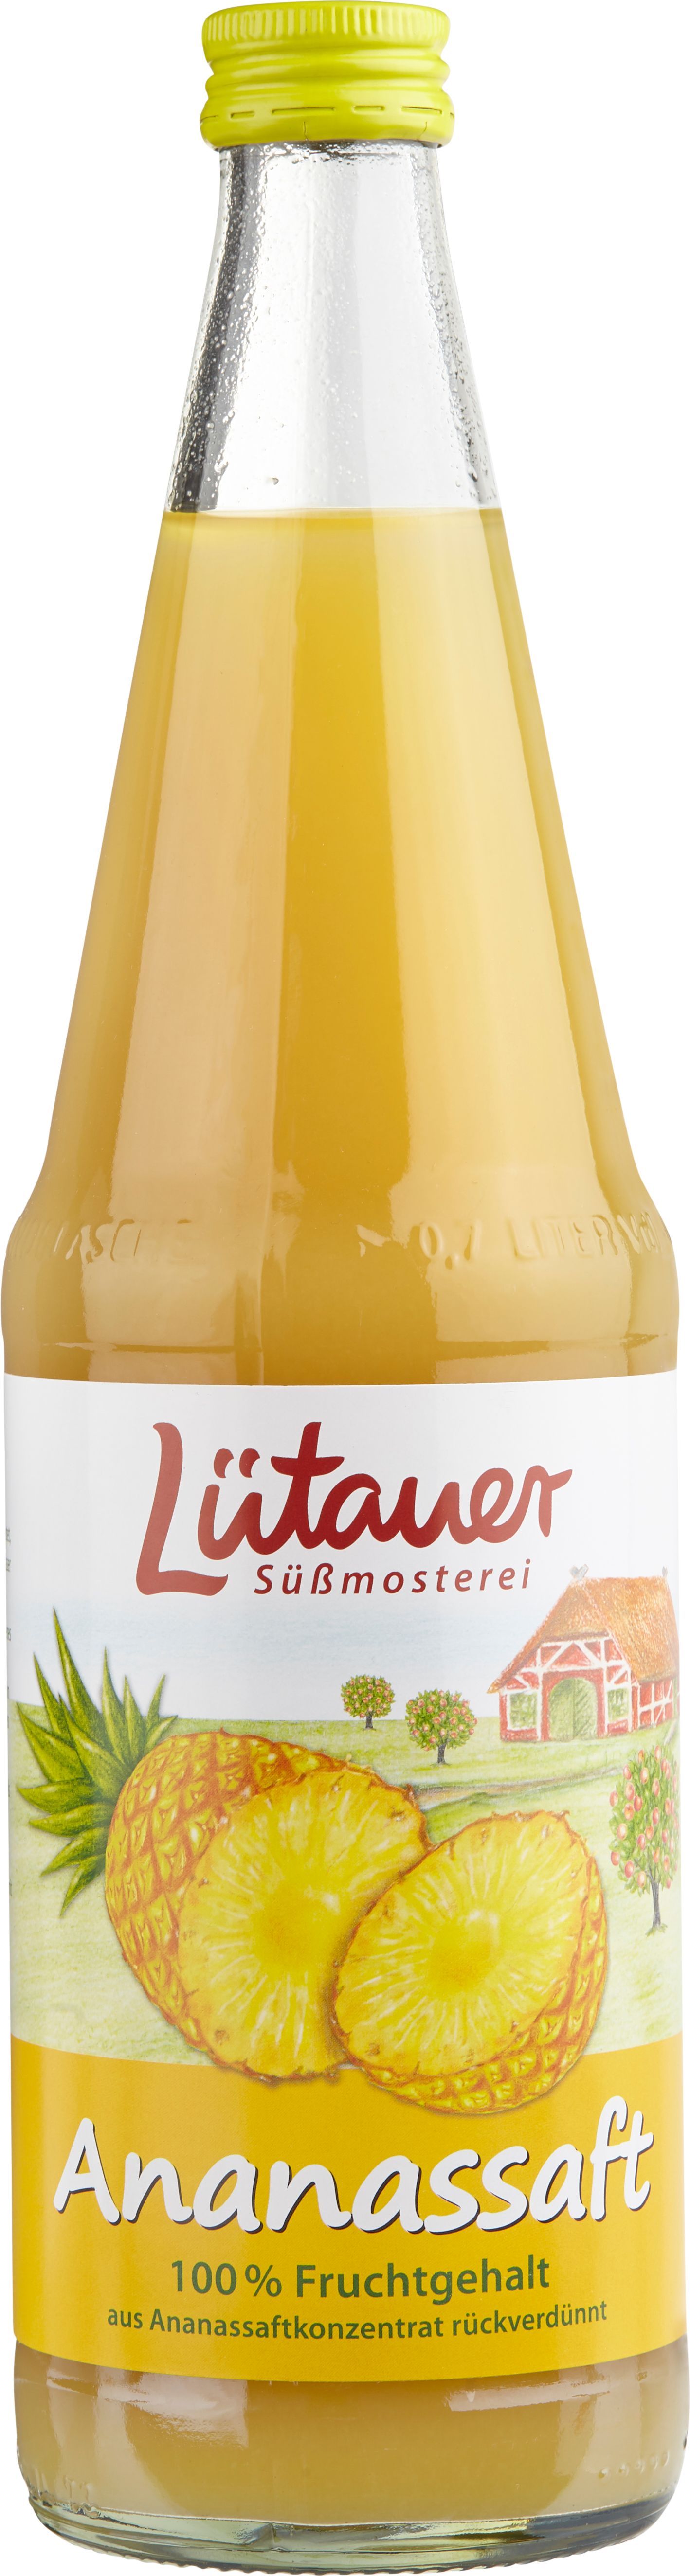 Lütauer Ananas-Saft 6/0.7